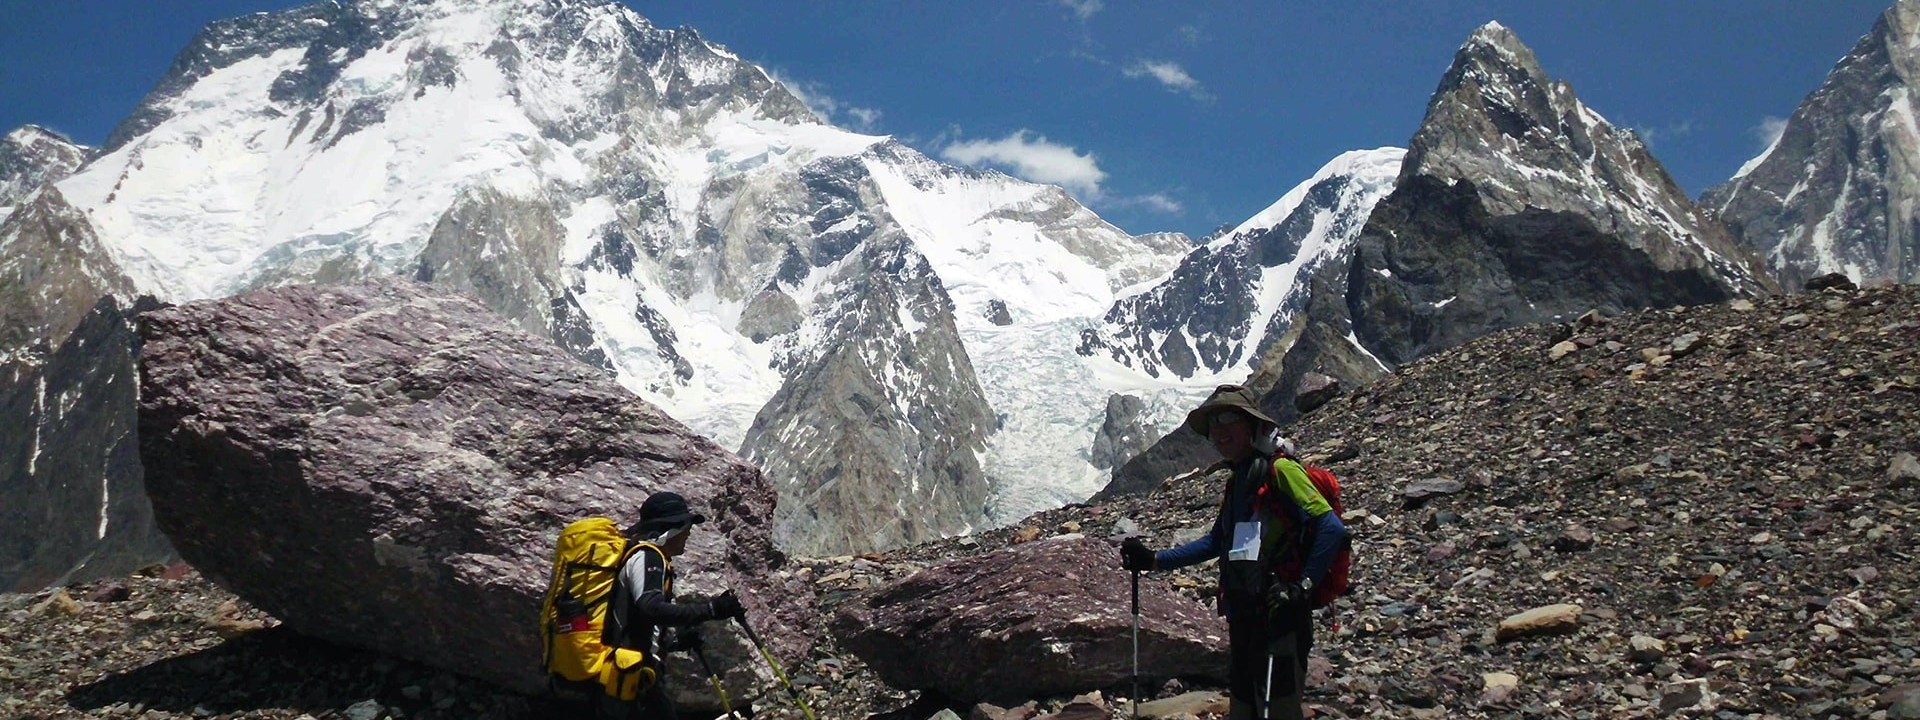 Mt. K2 Adventure Trekking and Expedition